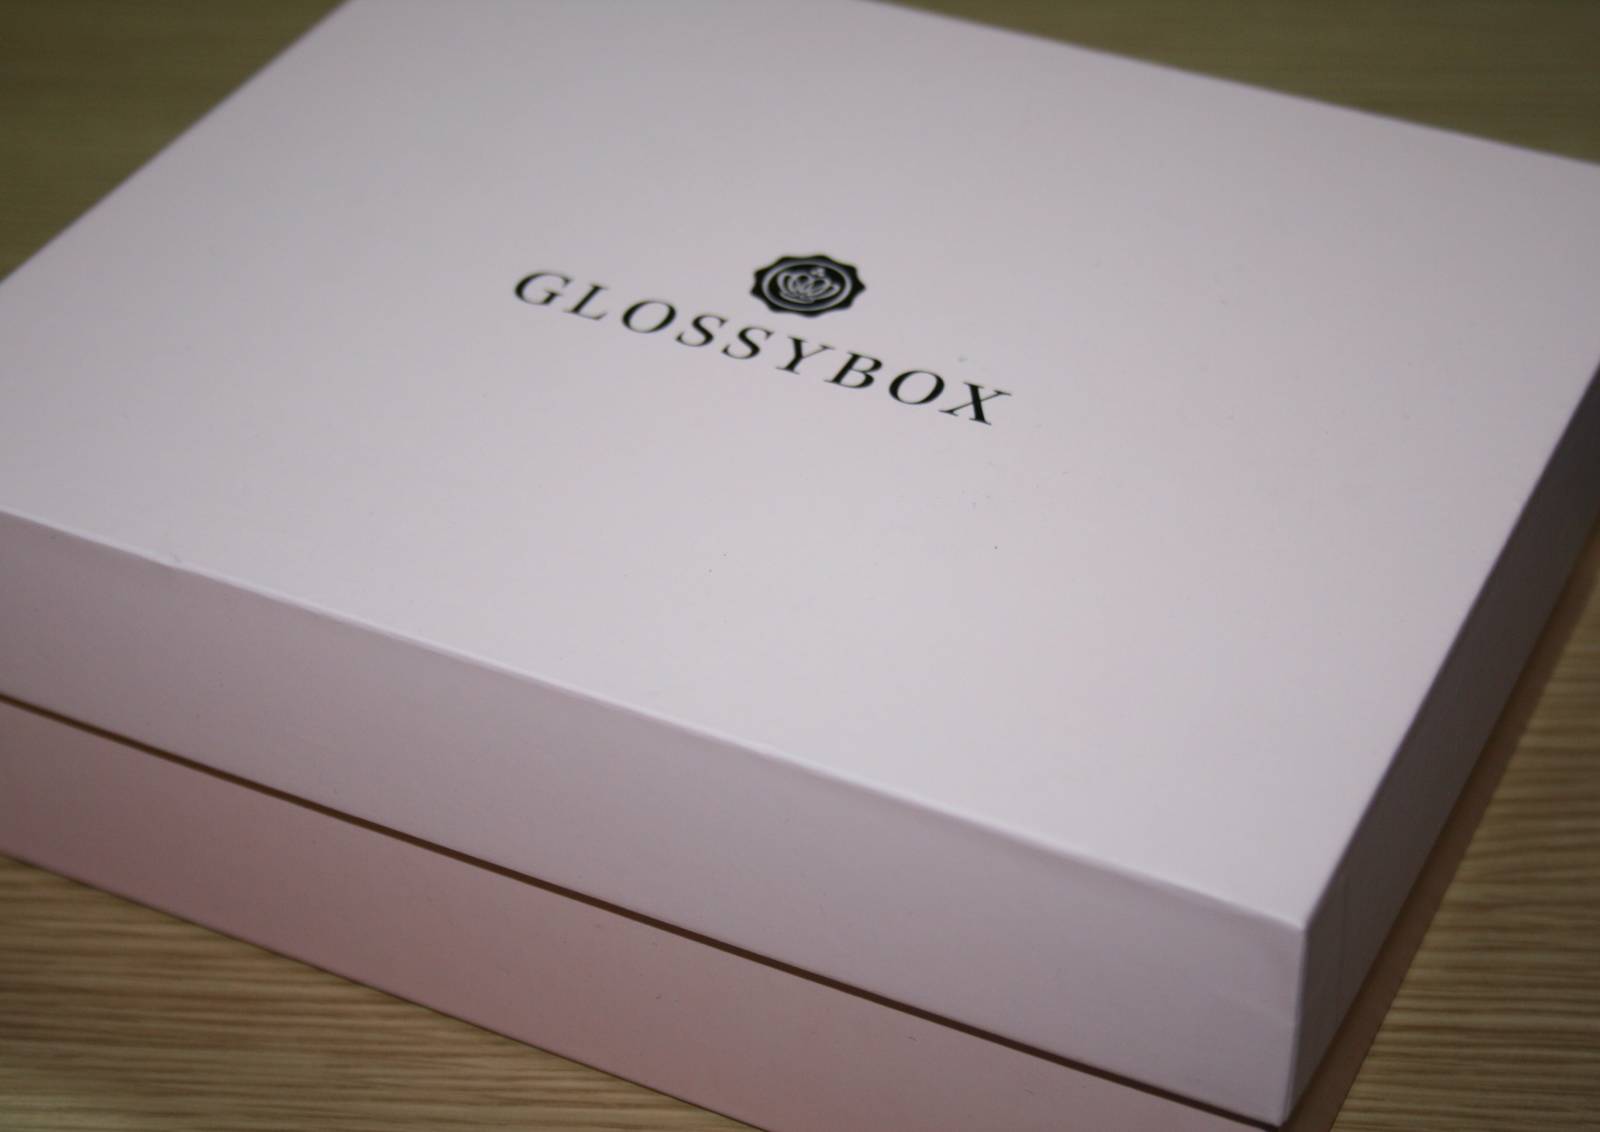 Glossybox October 2015